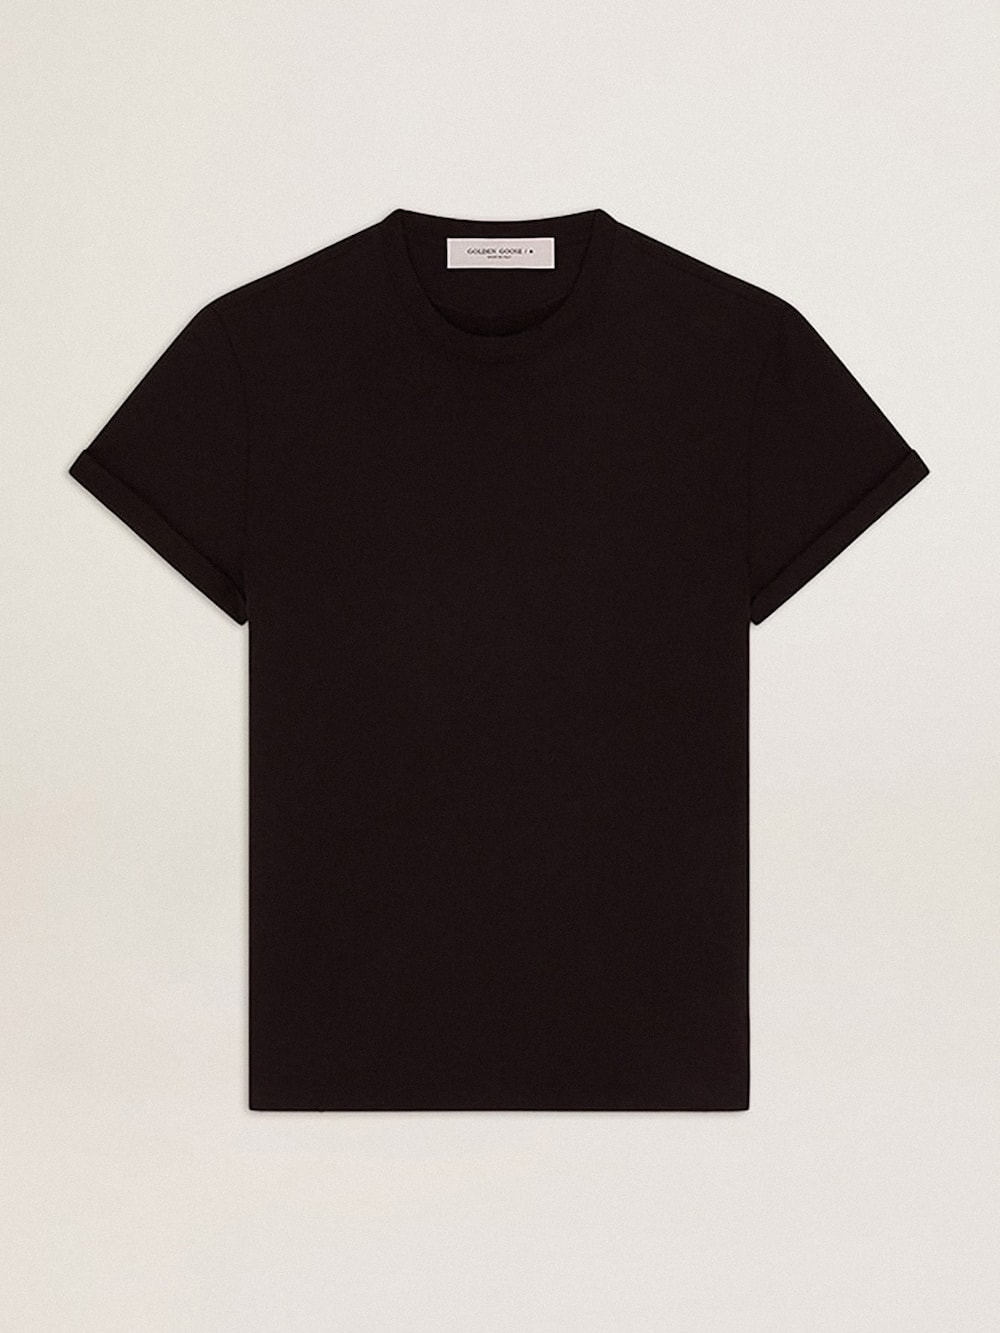 Golden Goose - Women’s slim-fit distressed T-shirt in black in 